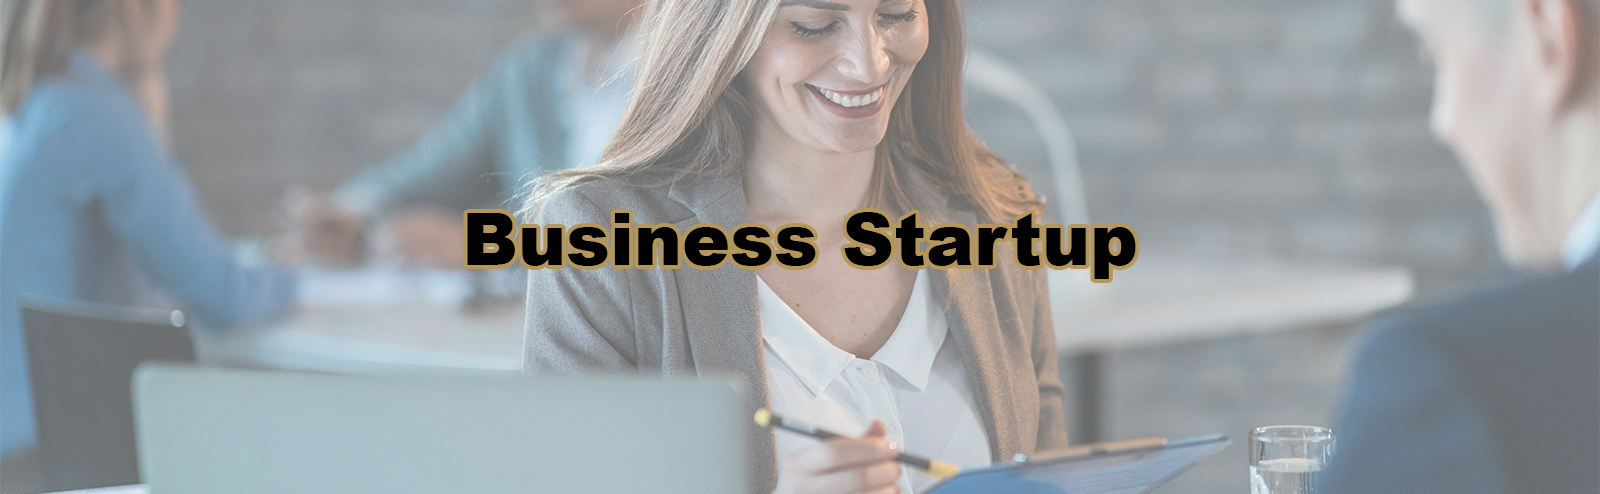 Business Startup Banner